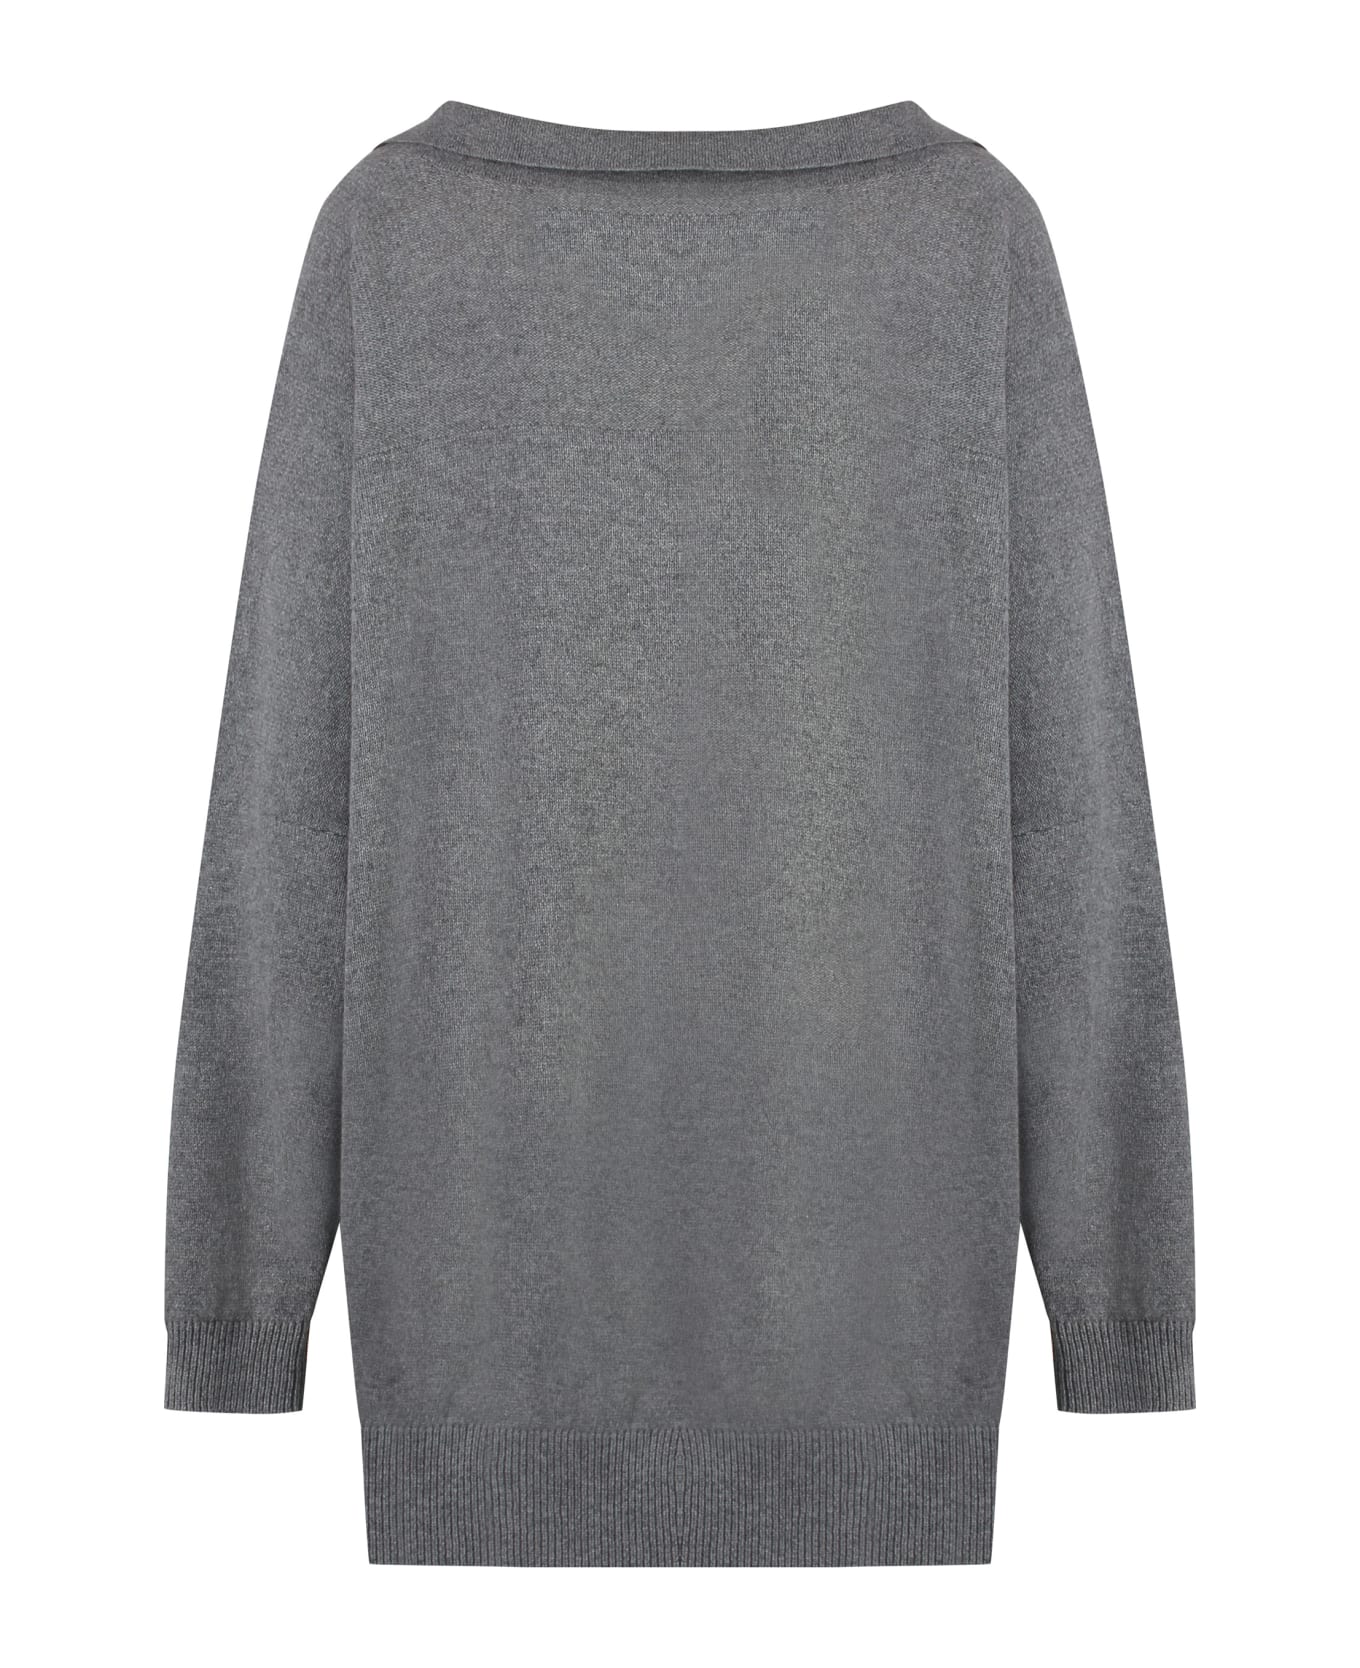 Stella McCartney Cashmere V-neck Sweater - grey